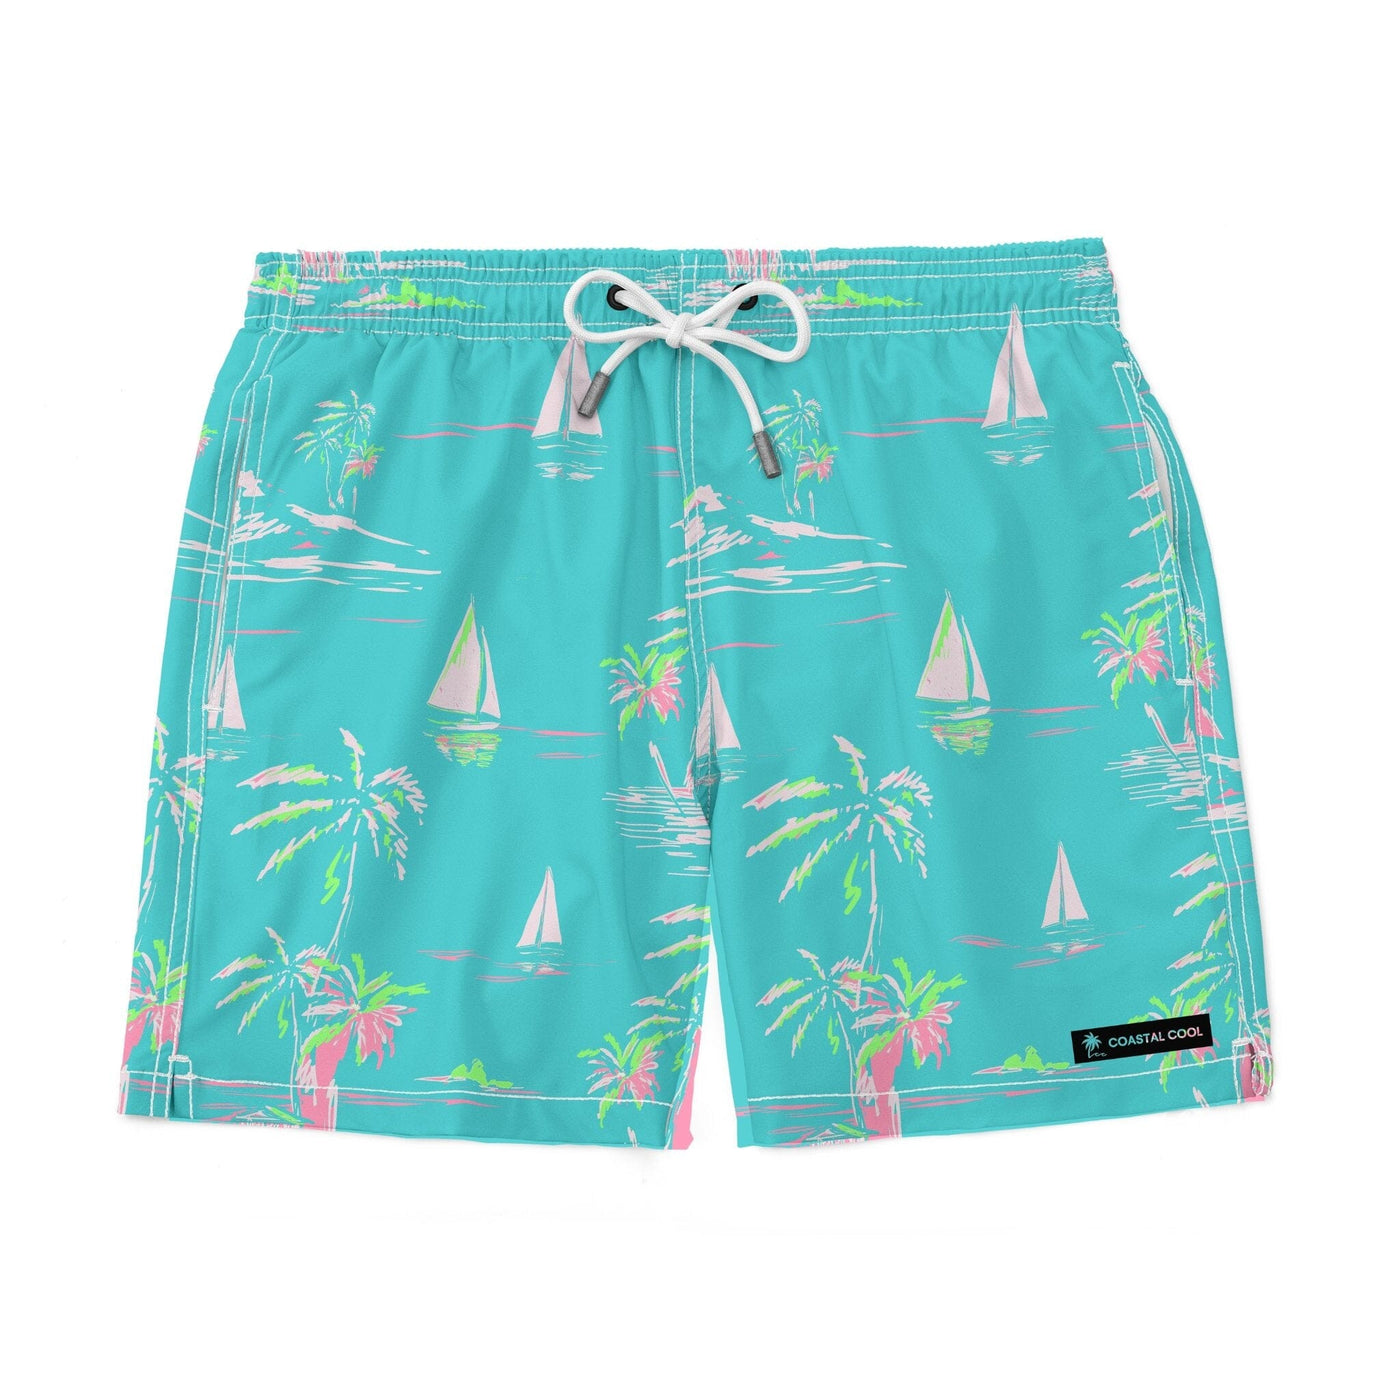 Island Oasis Swim Trunks - Coastal Cool - Swimwear and Beachwear - Recycled fabrics